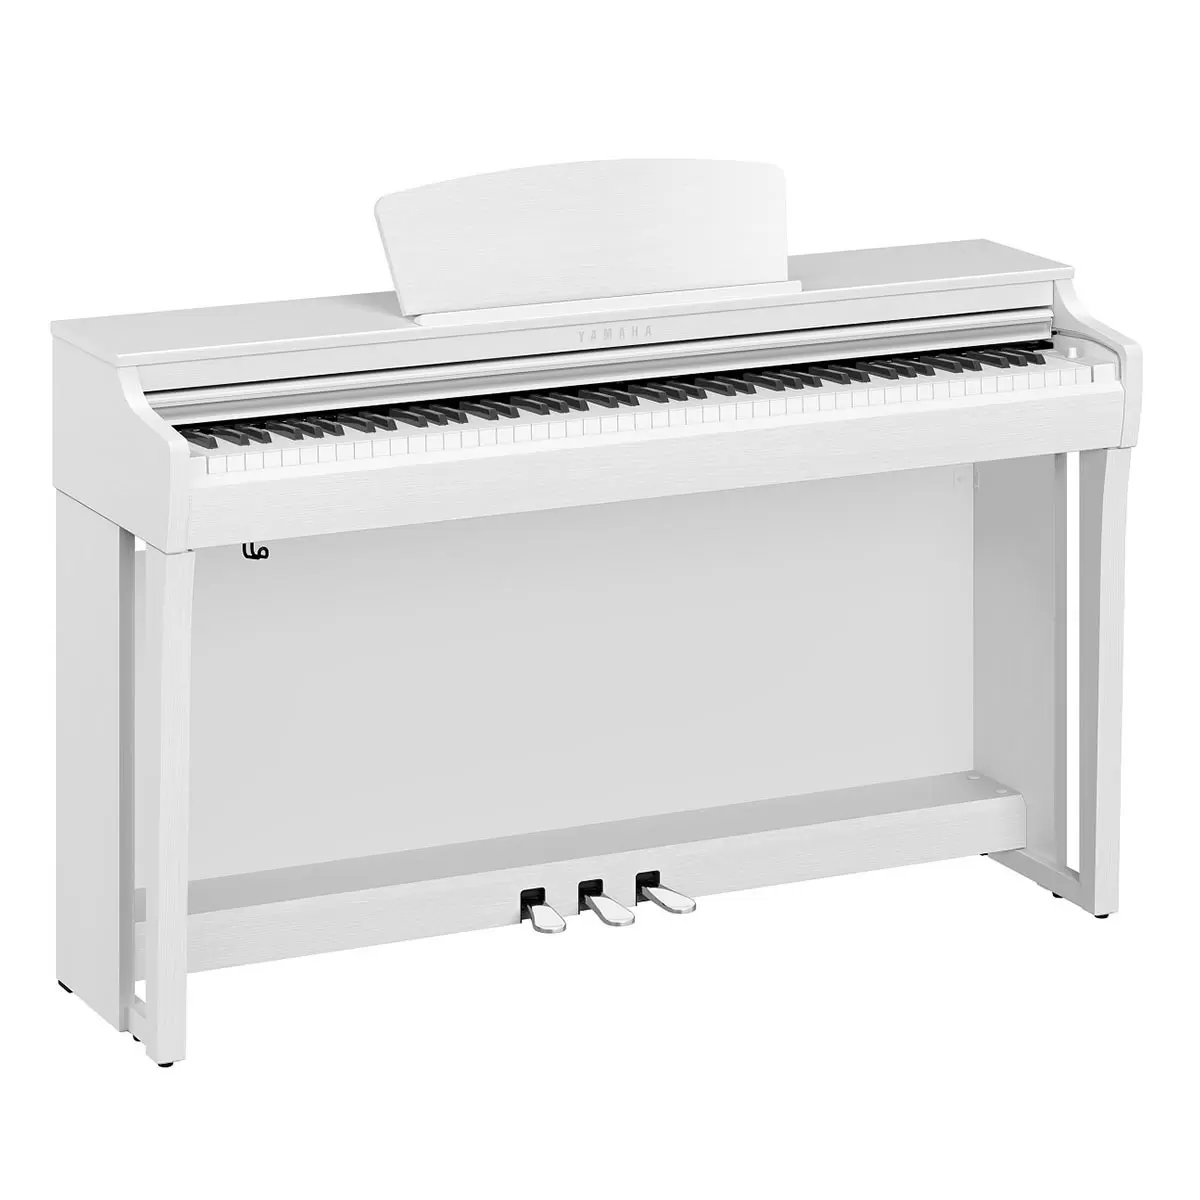 Yamaha 88鍵數位鋼琴 CLP725WH 白色